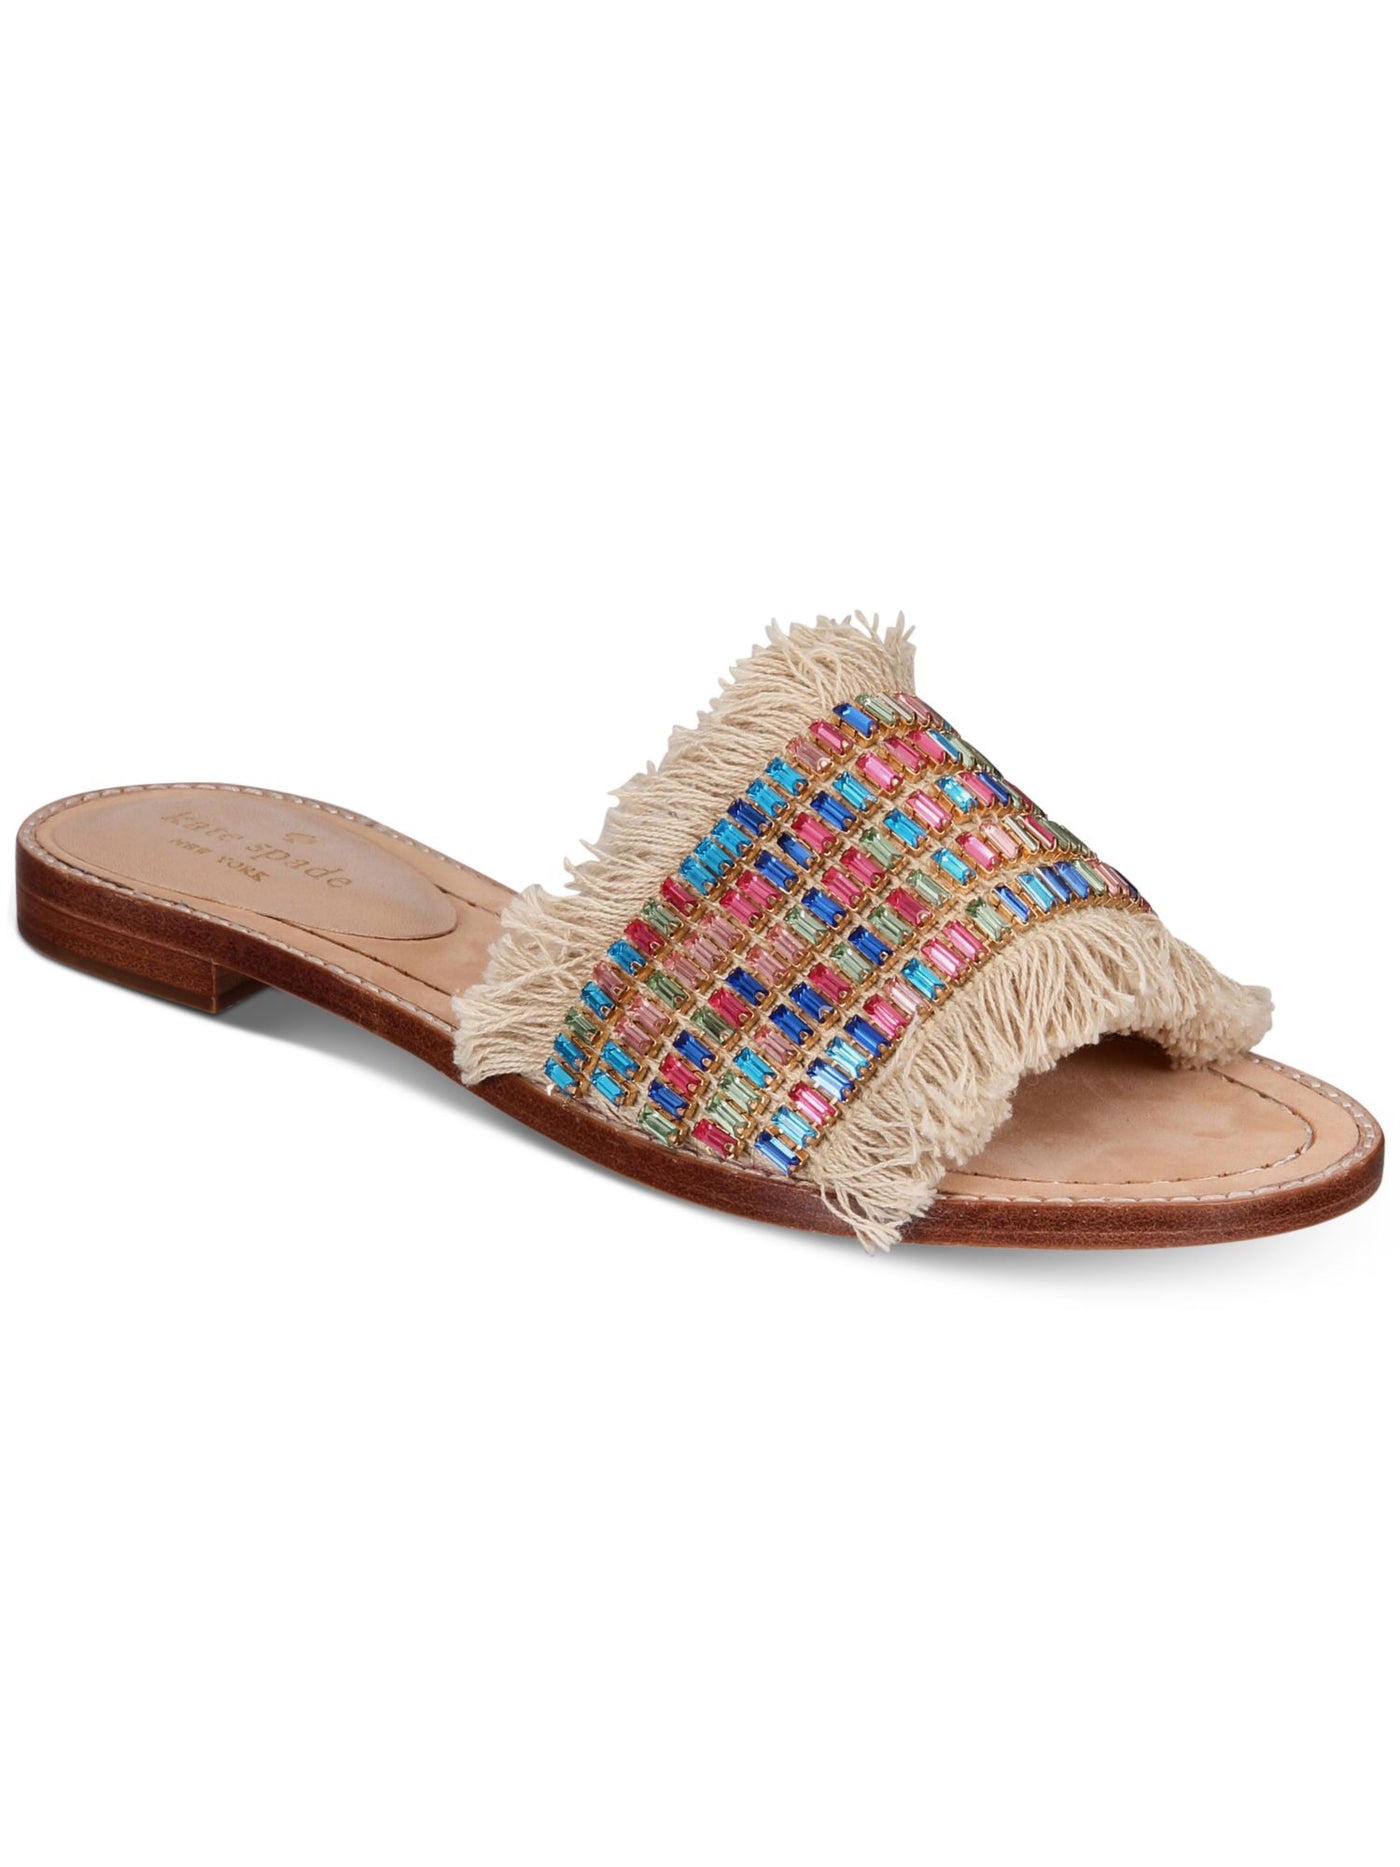 KATE SPADE NEW YORK Womens Beige Embellished Frayed Solaina Round Toe Slip On Slide Sandals Shoes 7.5 M